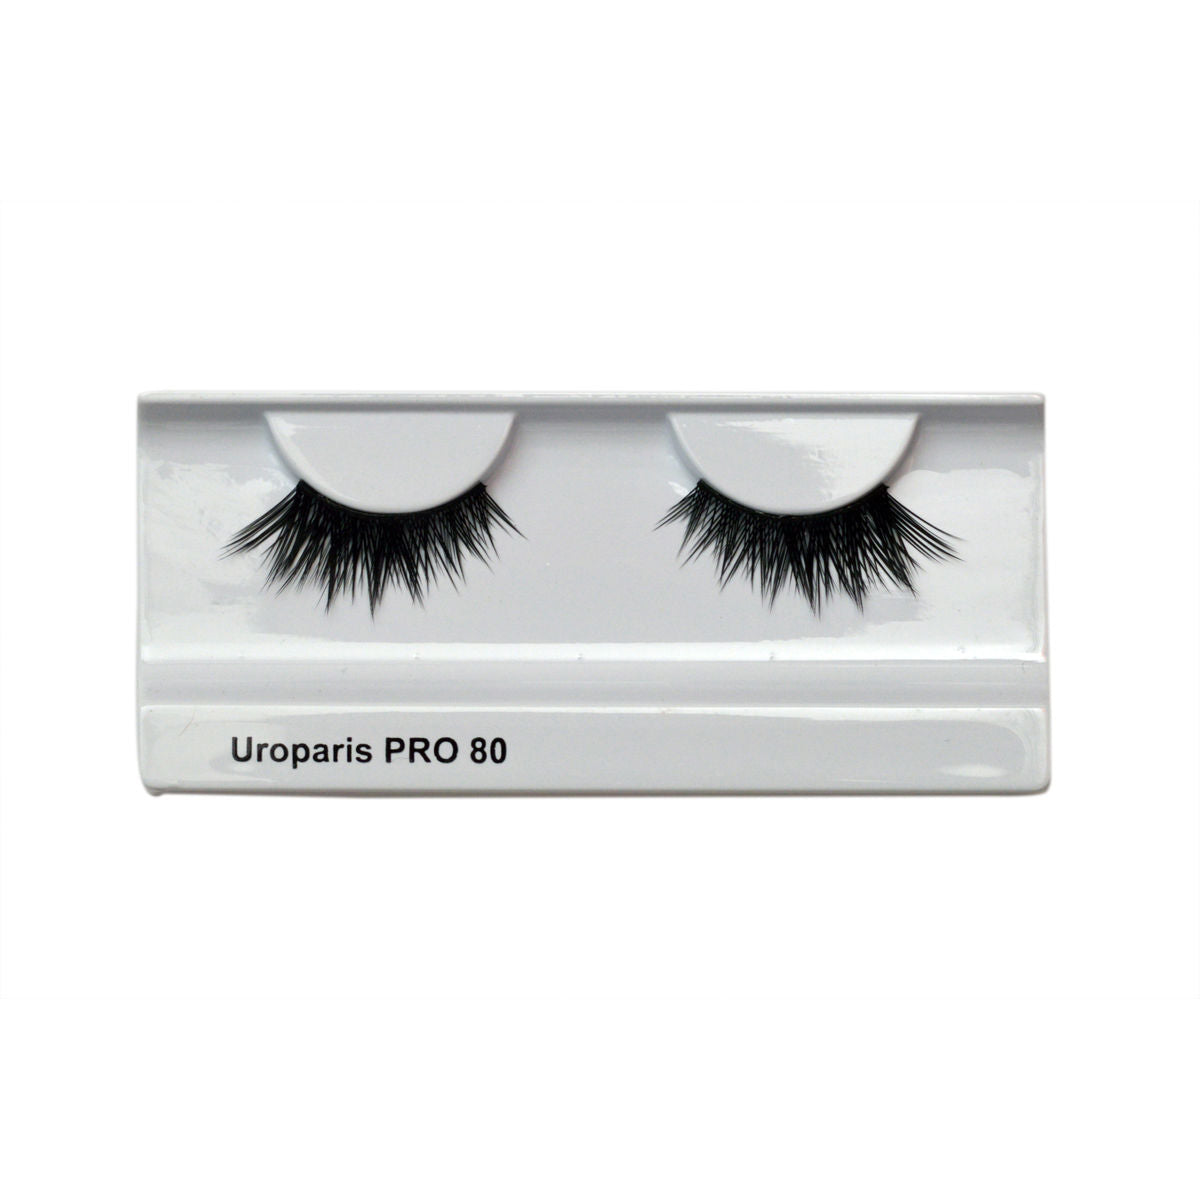 Uroparis Eyelashes Pro 80 Black (1 pair) Uroparis